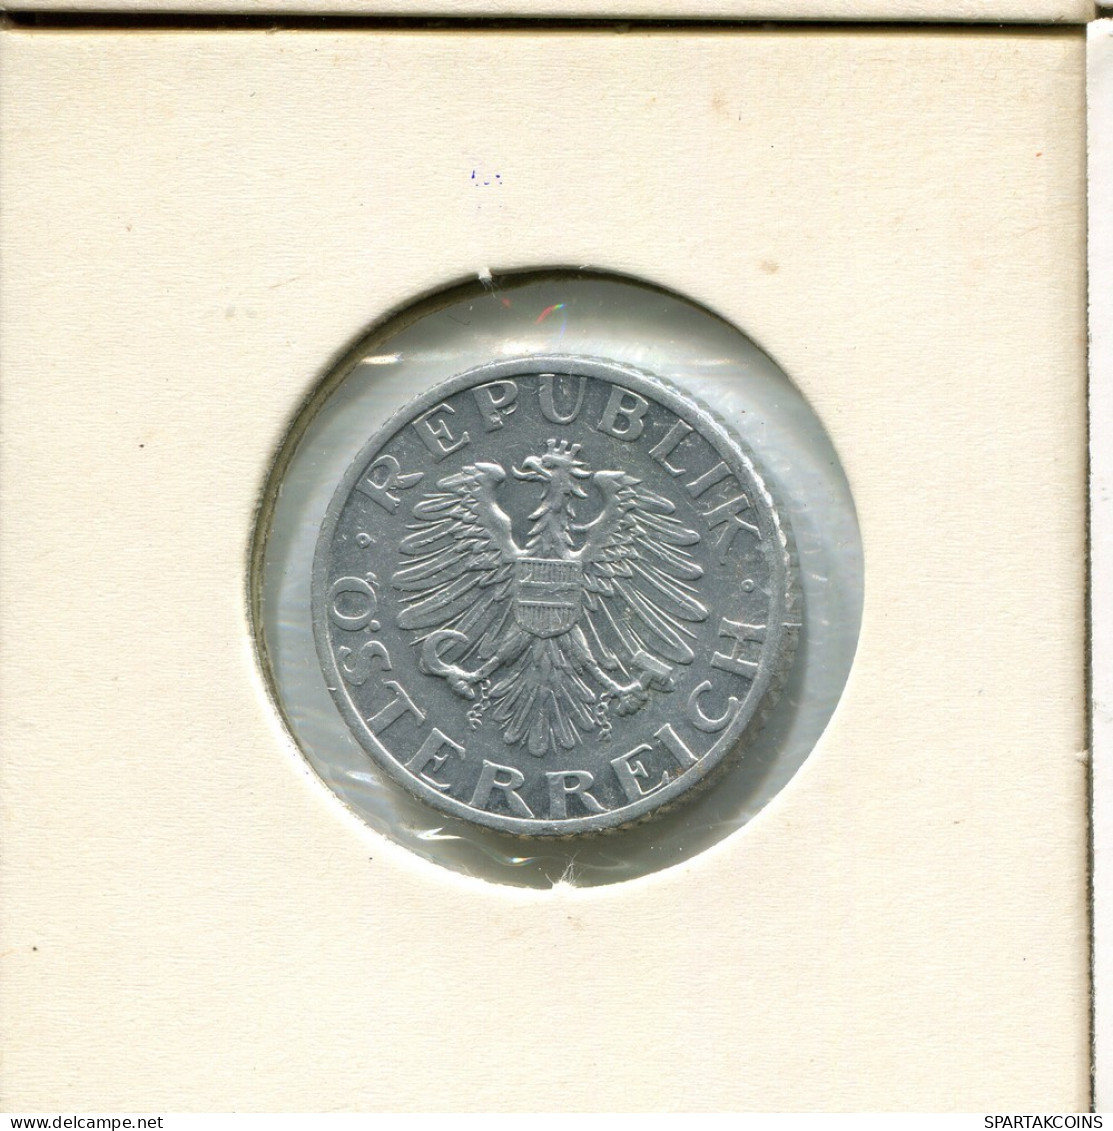 50 GROSCHEN 1952 AUSTRIA Coin #AR769.U.A - Austria